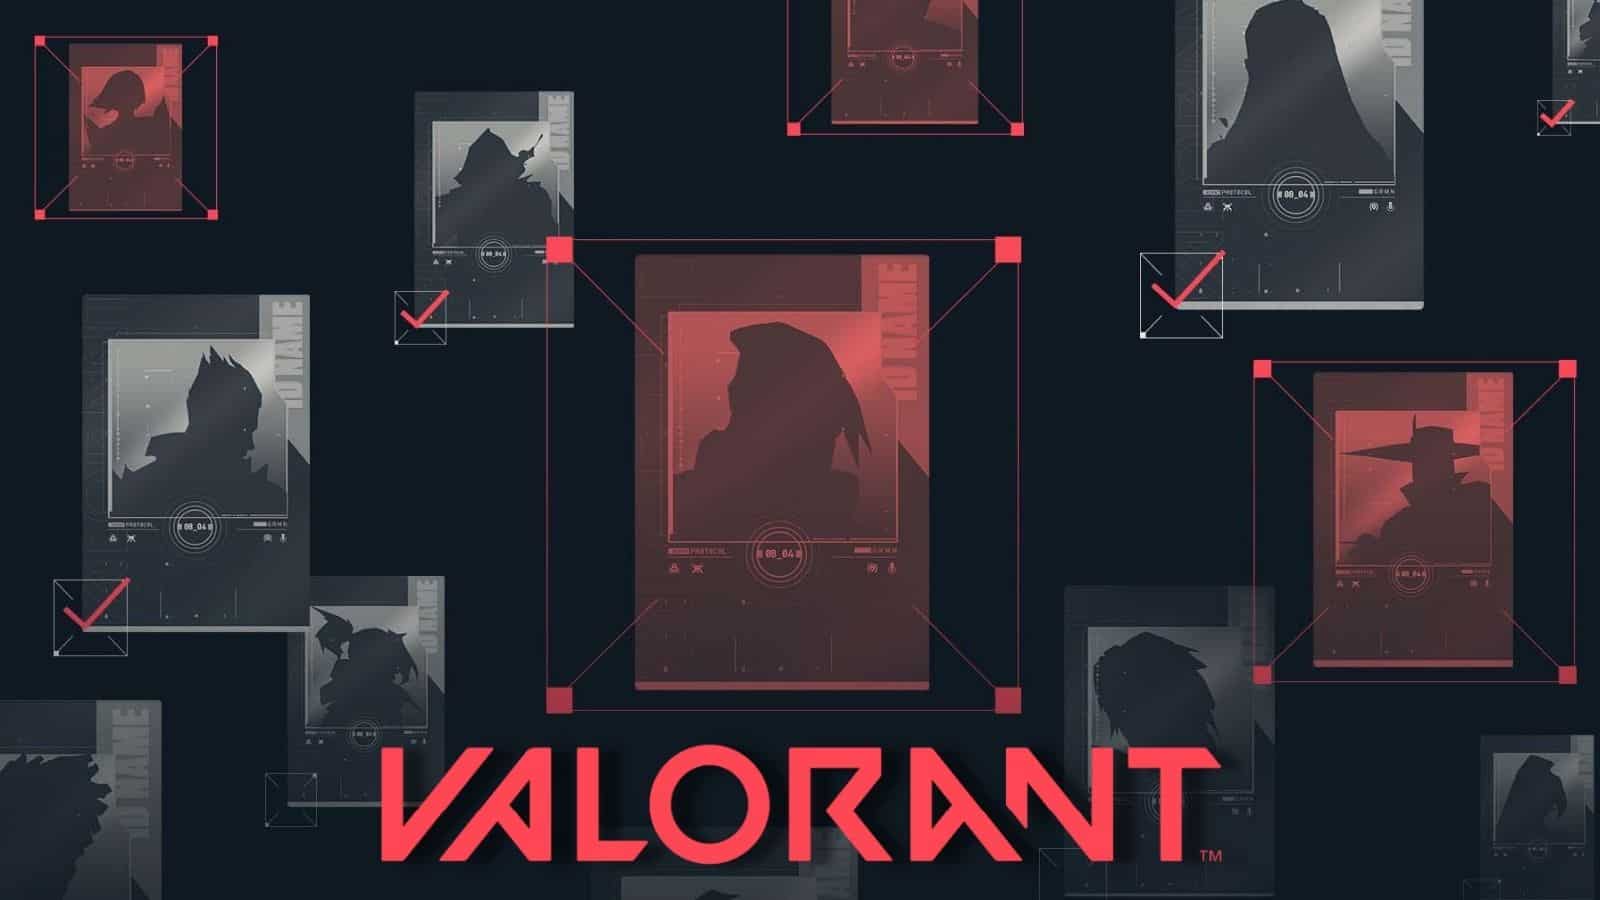 Prime Gaming - Valorant